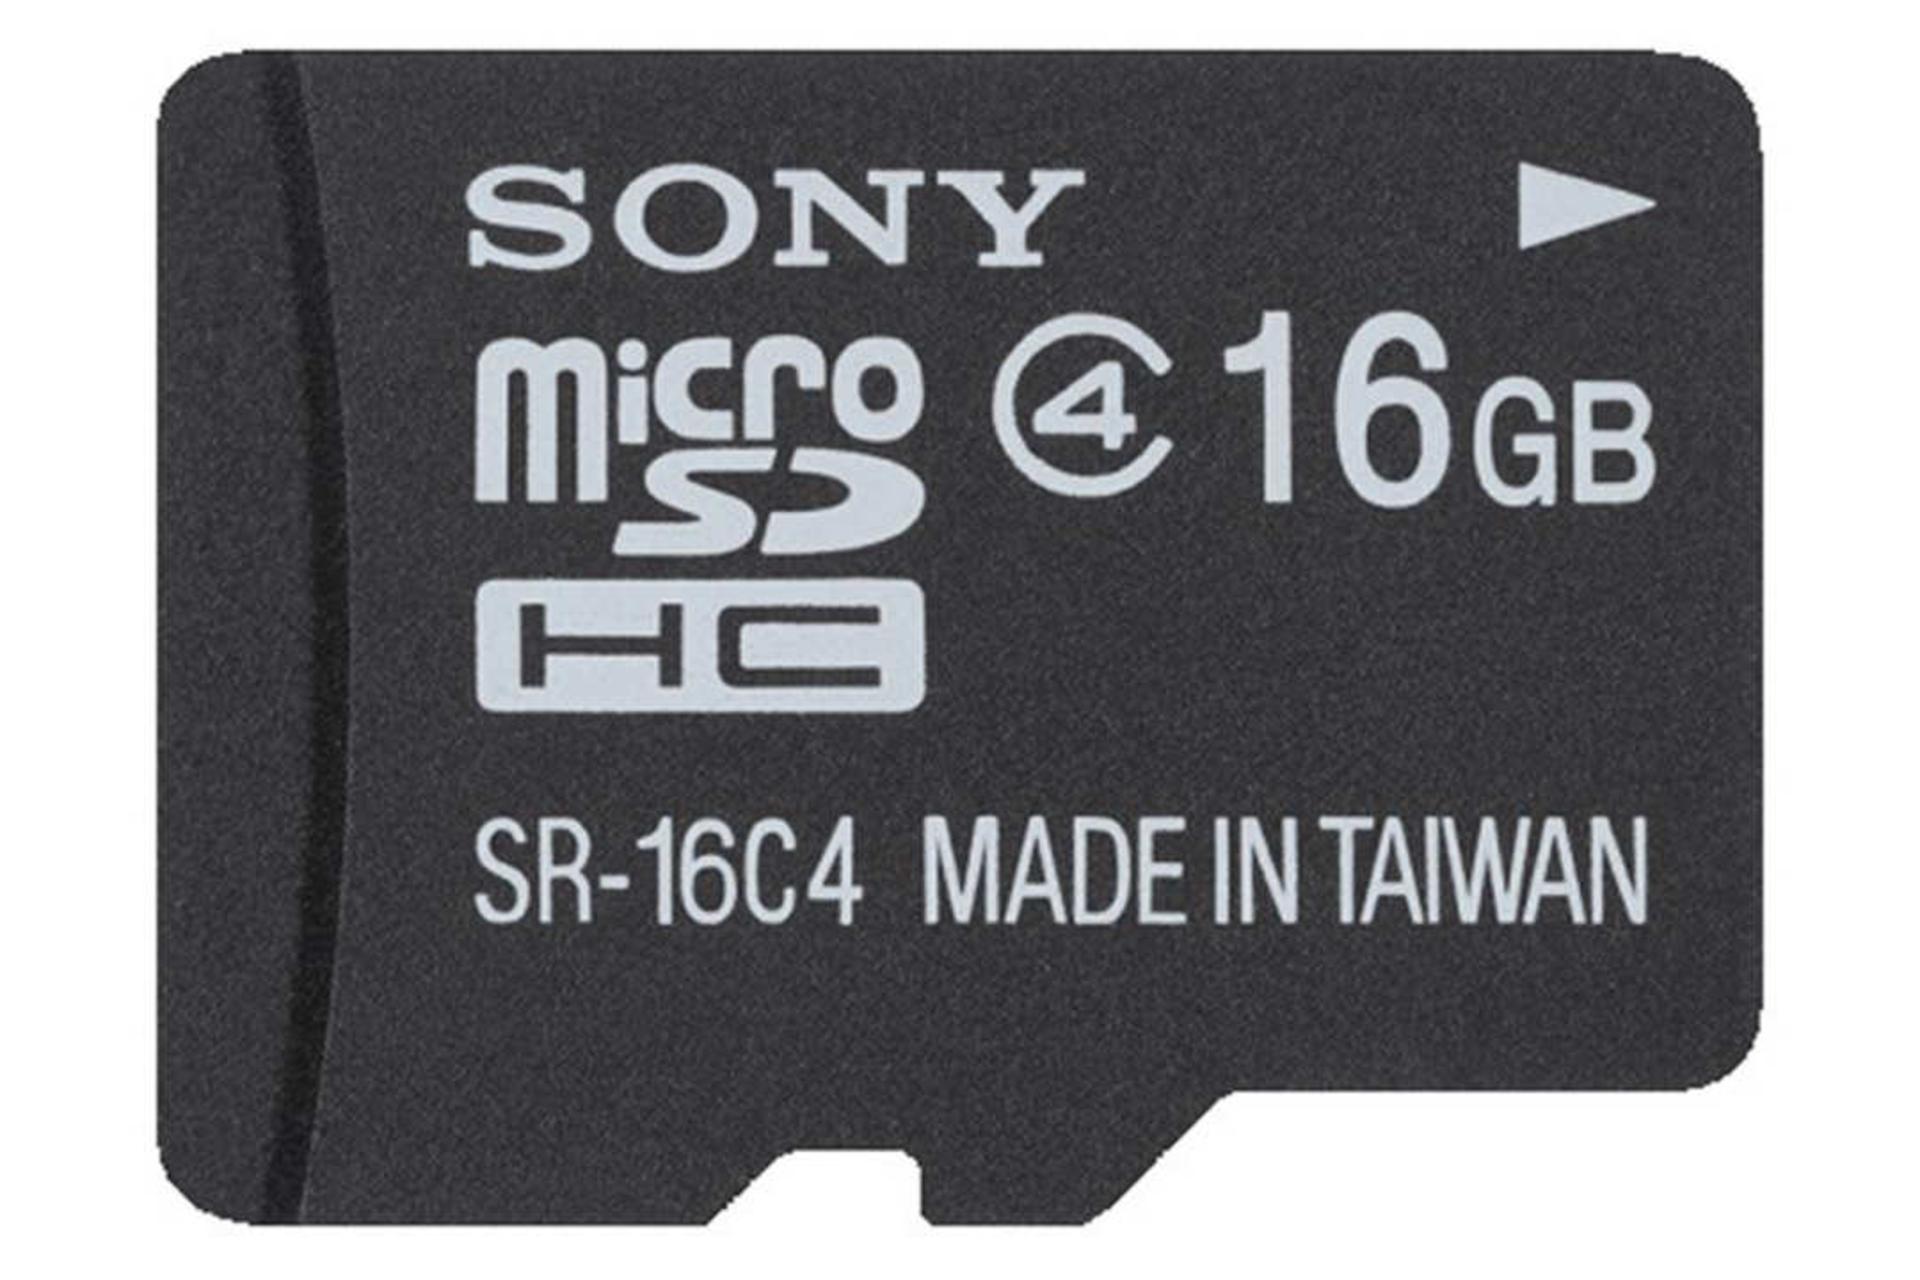 Sony SR-16C4 microSDHC Class 4 16GB